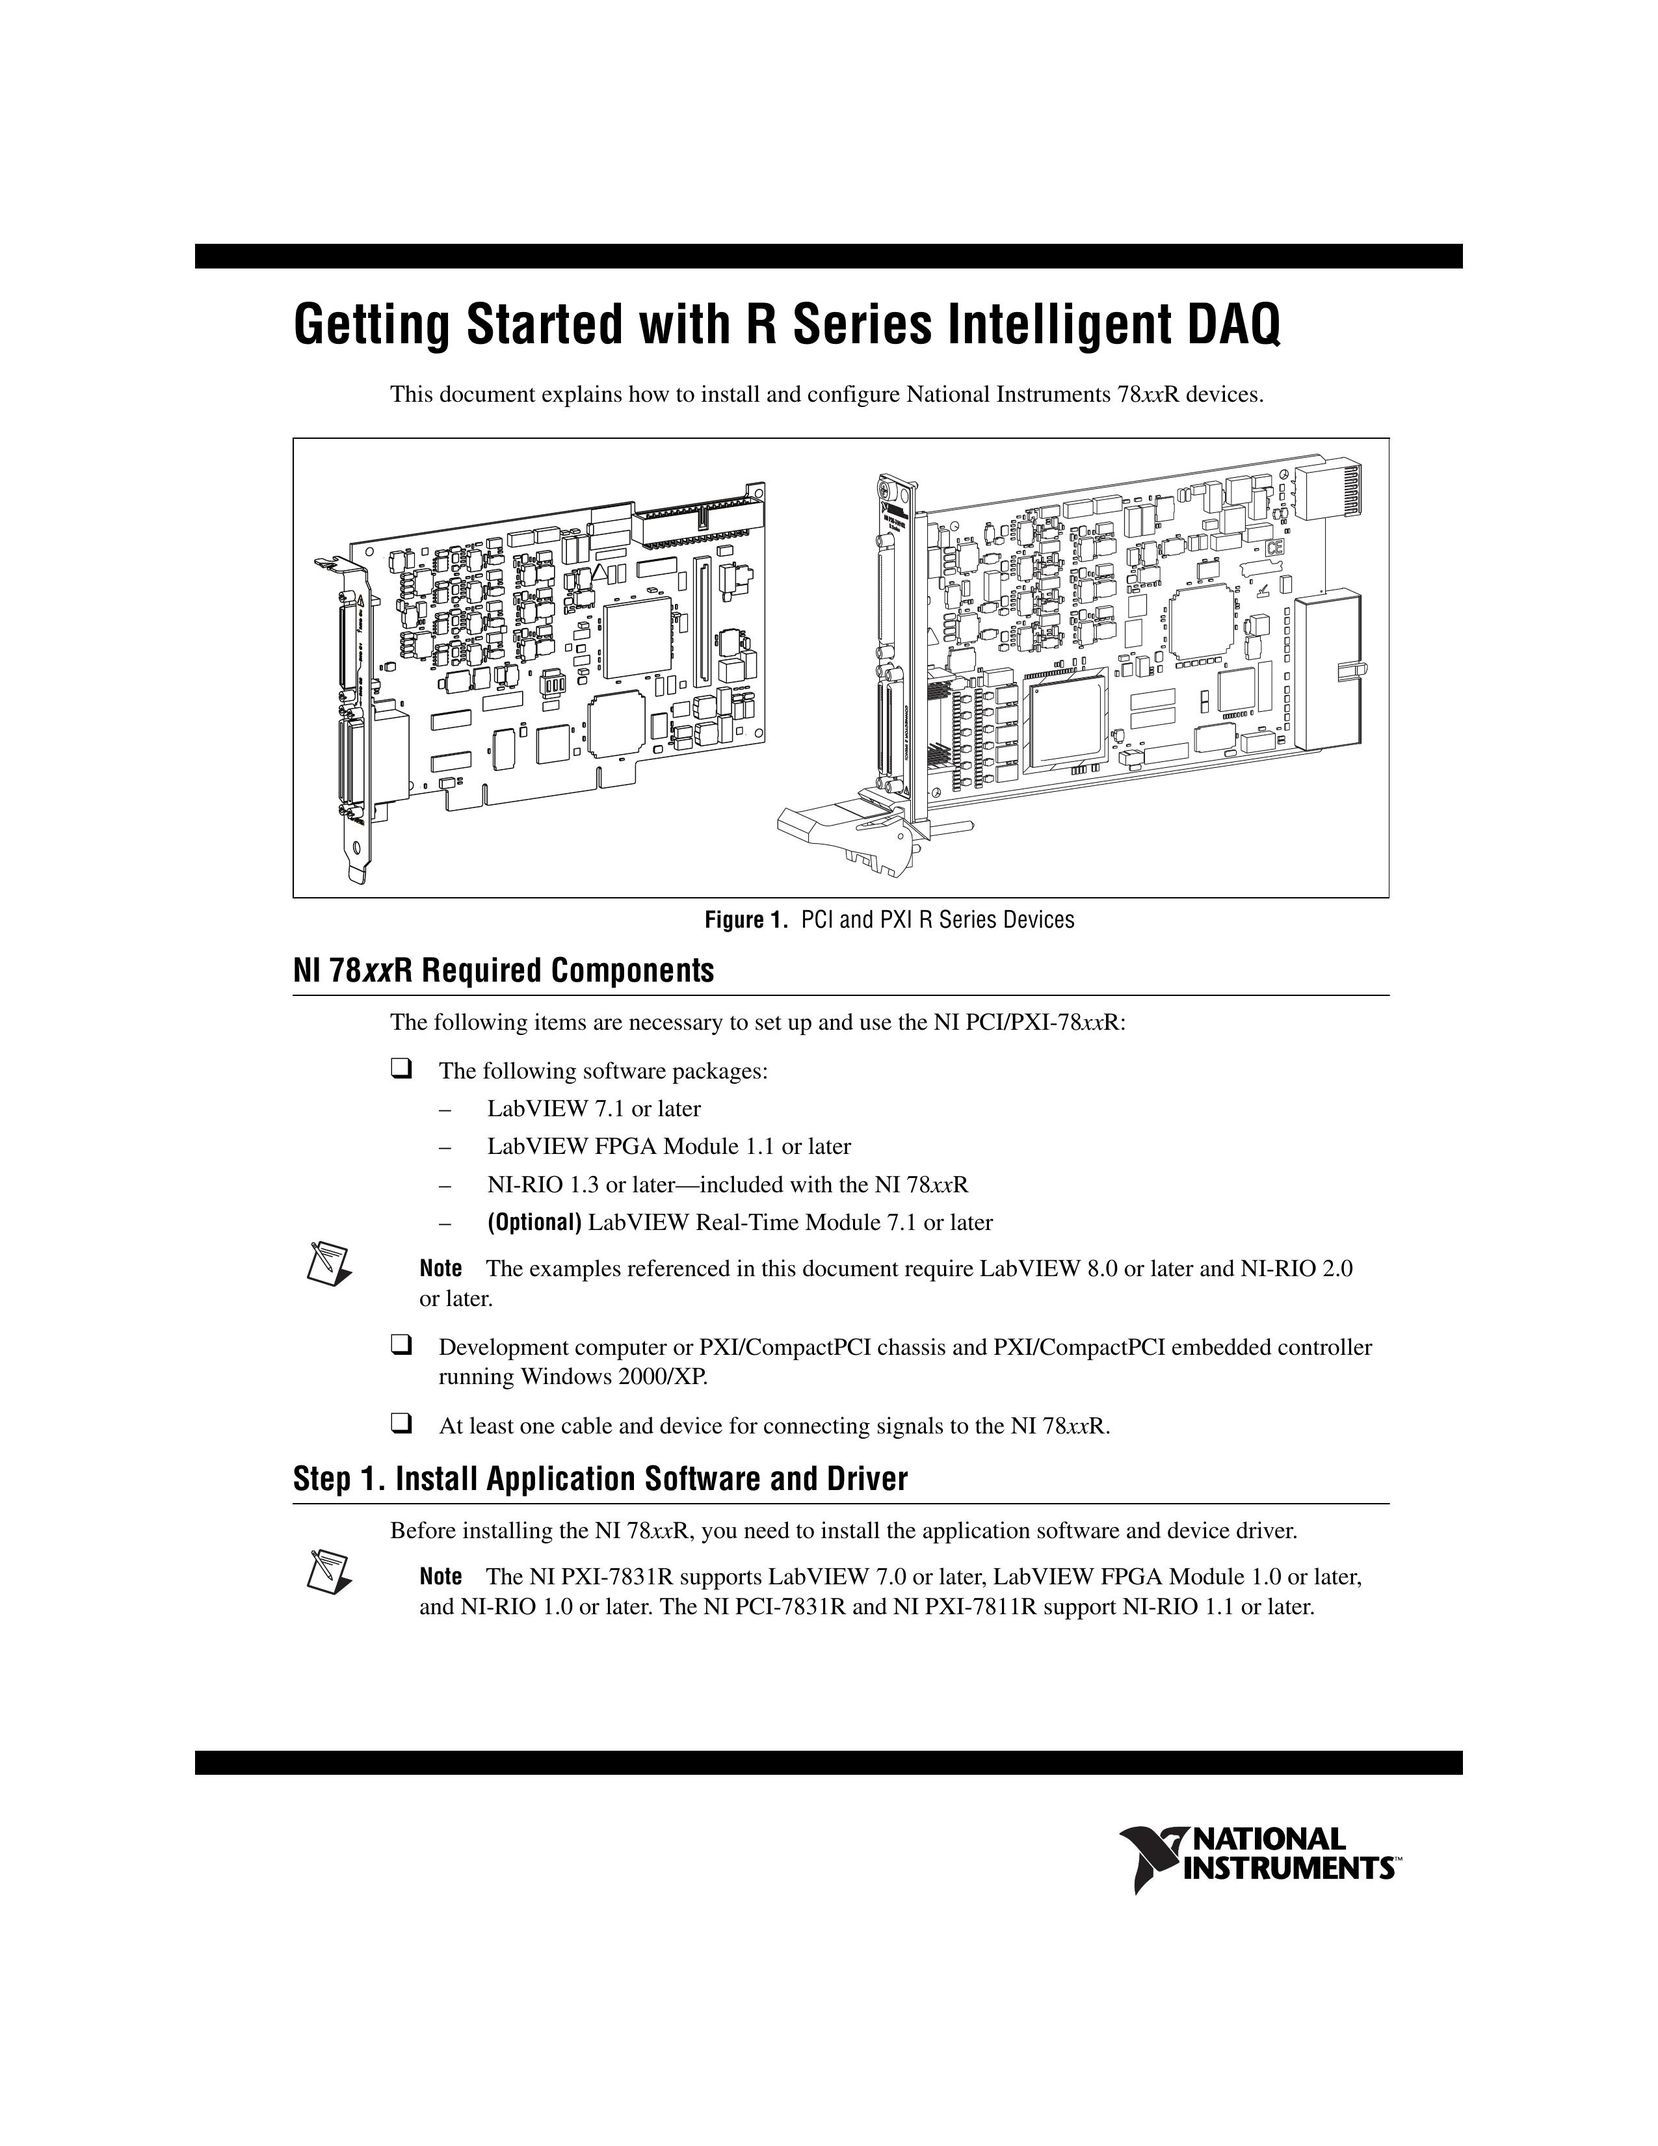 National Instruments NI 78xxR Switch User Manual